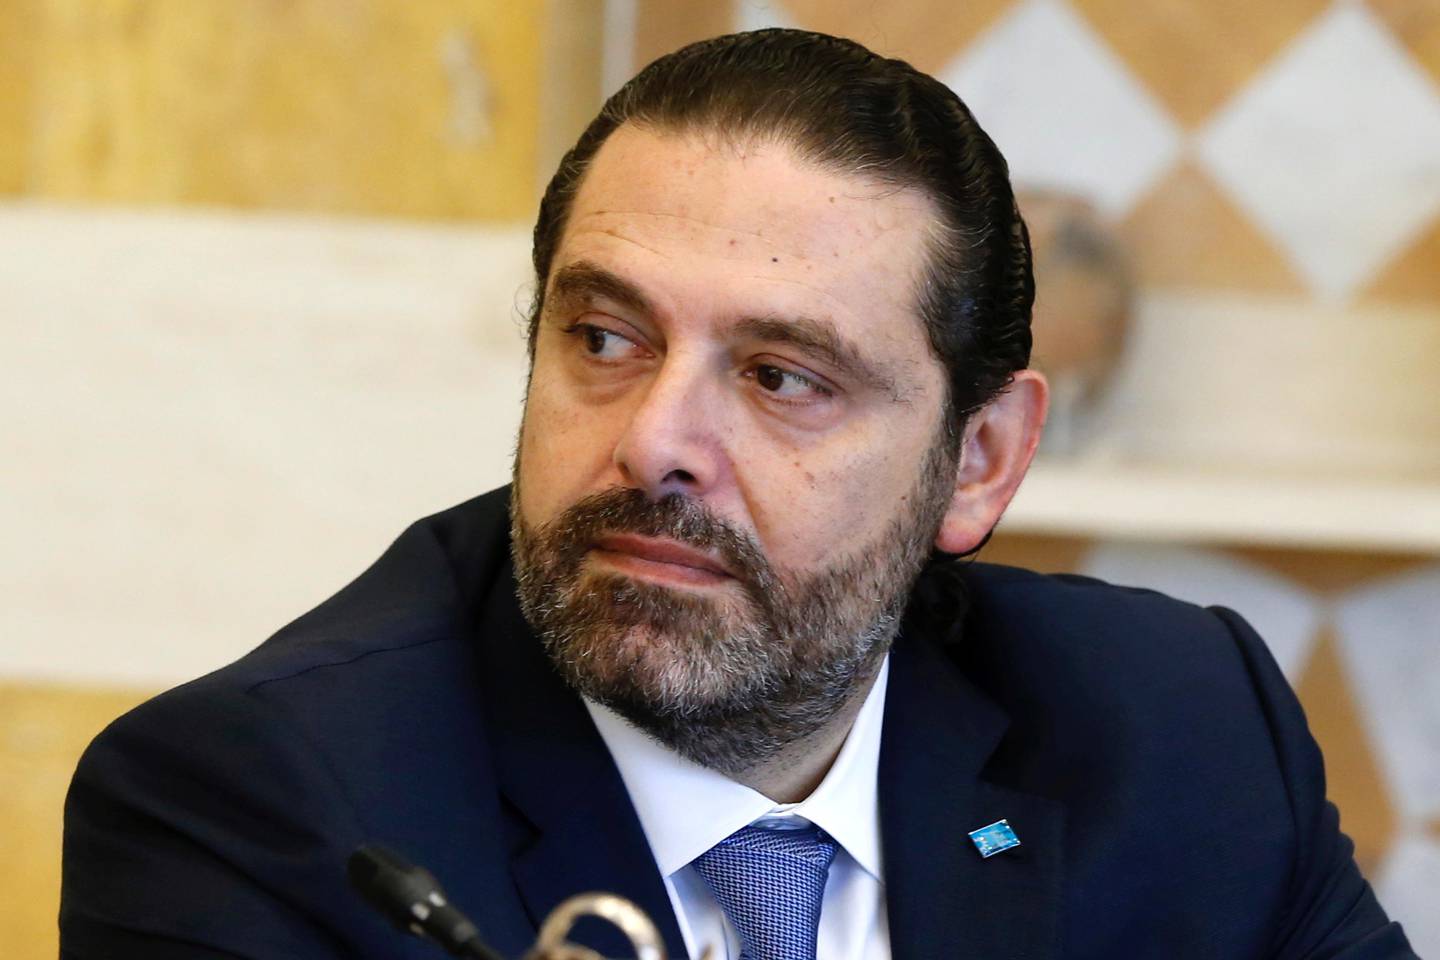 Lebanon's Prime Minister Saad al-Hariri attends a cabinet session at the Baabda palace, Lebanon October 21, 2019. REUTERS/Mohamed Azakir